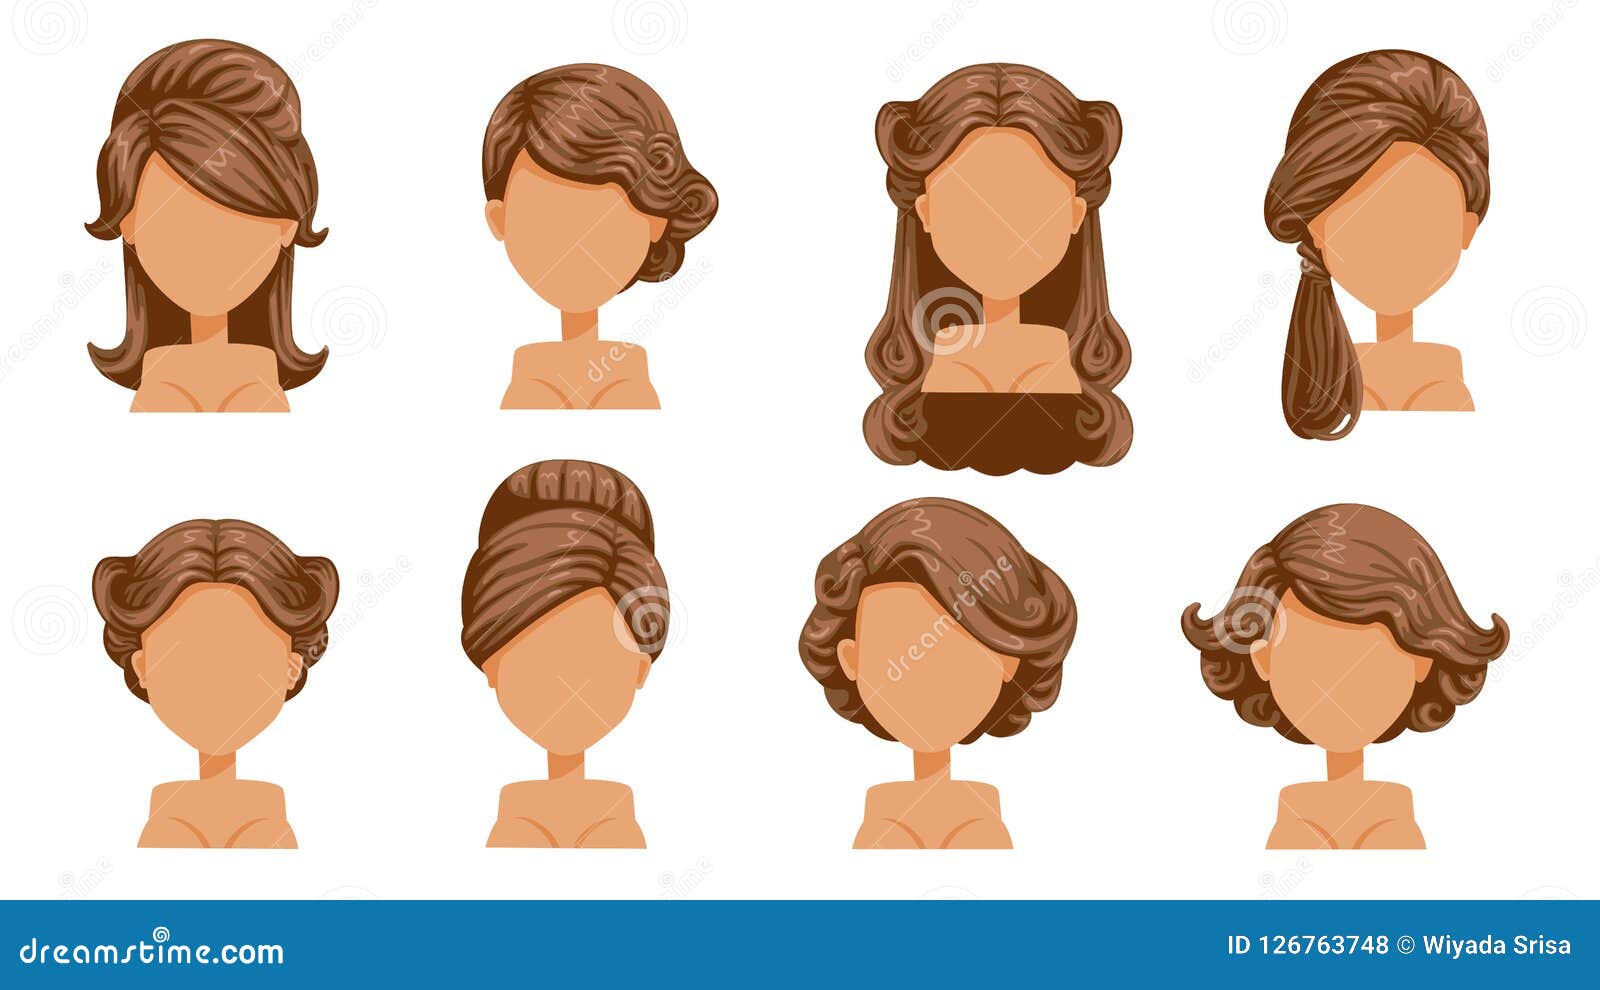 Female retro hair stock illustration. Illustration of people - 126763748